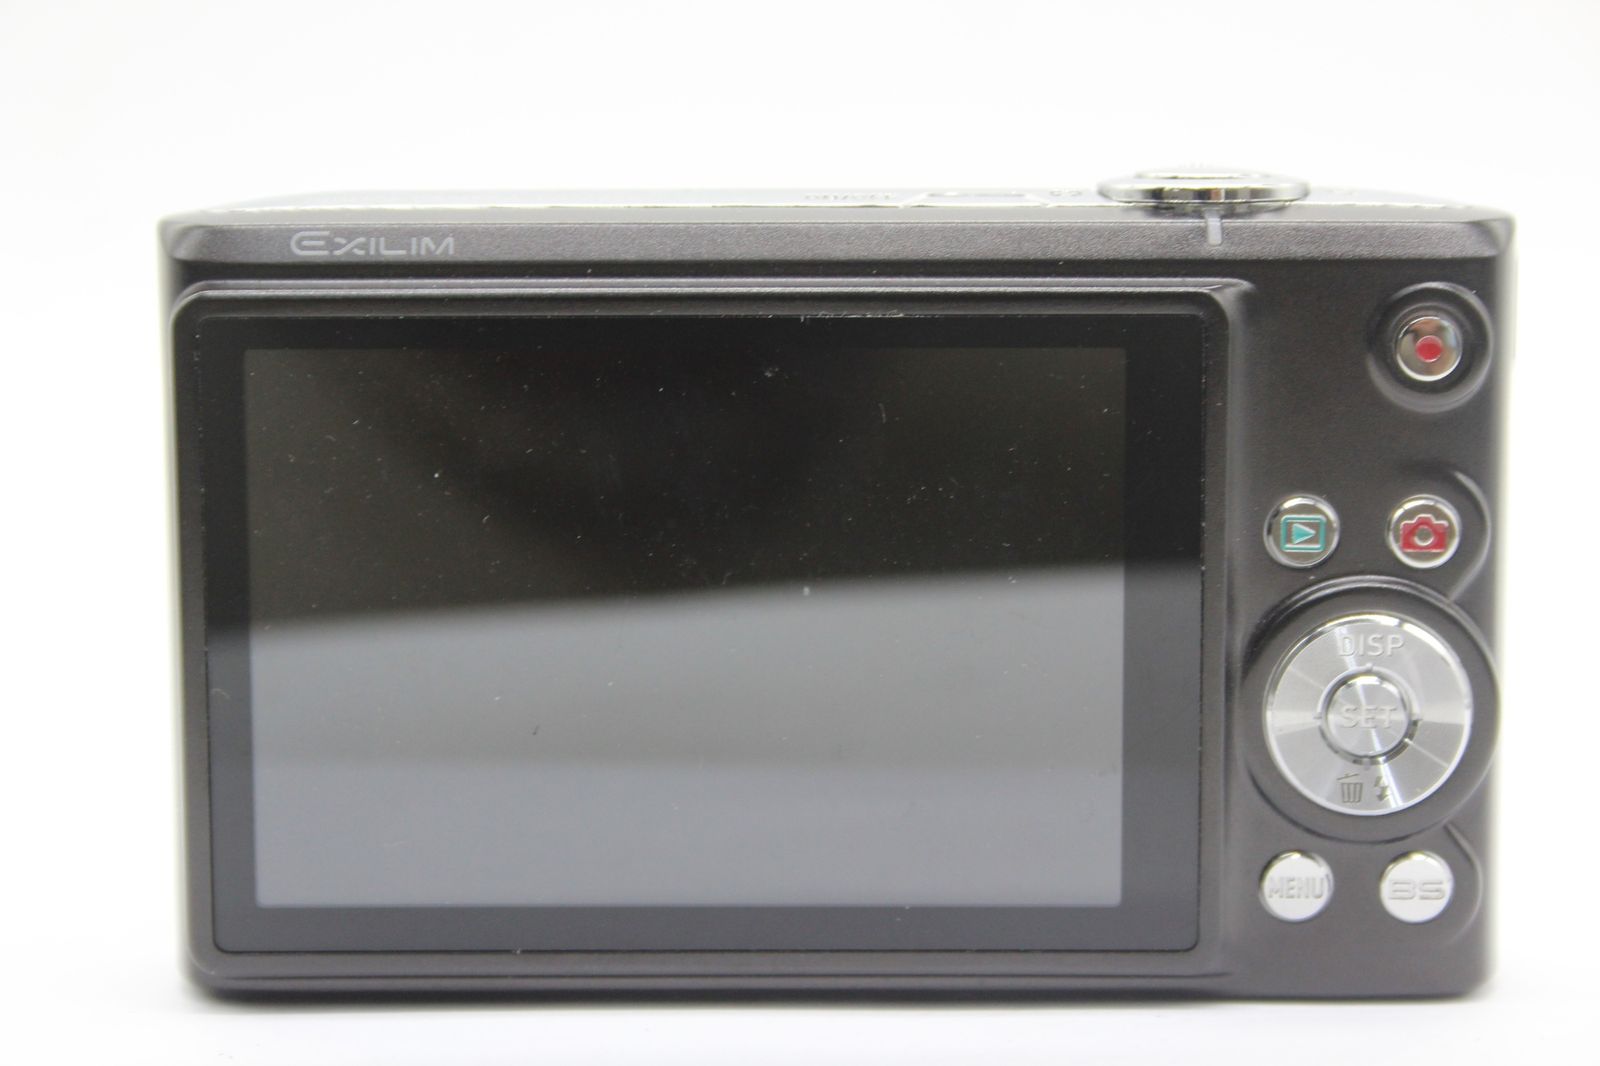 CASIO 【返品保証】 カシオ Casio Exilim EX-Z200 ブラック 4x バッテリー付き コンパクトデジタルカメラ s8861